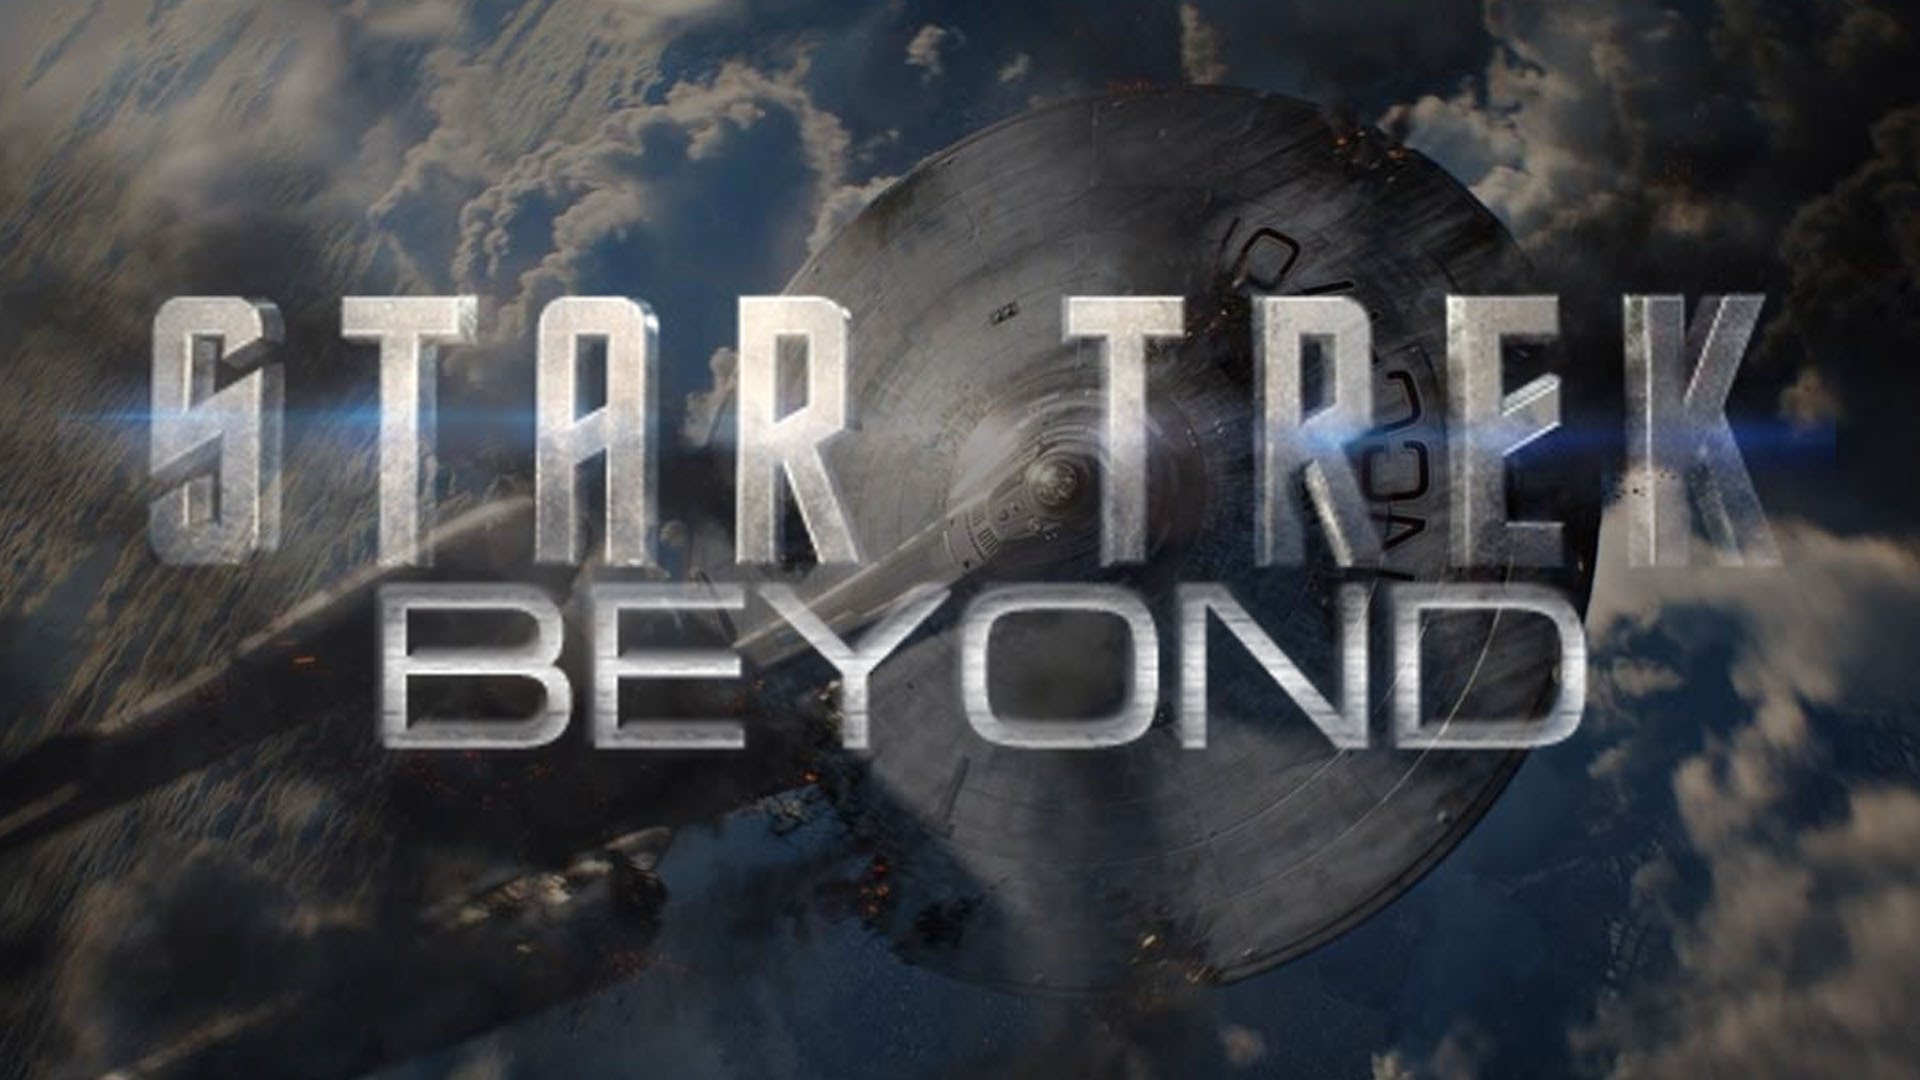 star trek beyond watch full movie online free